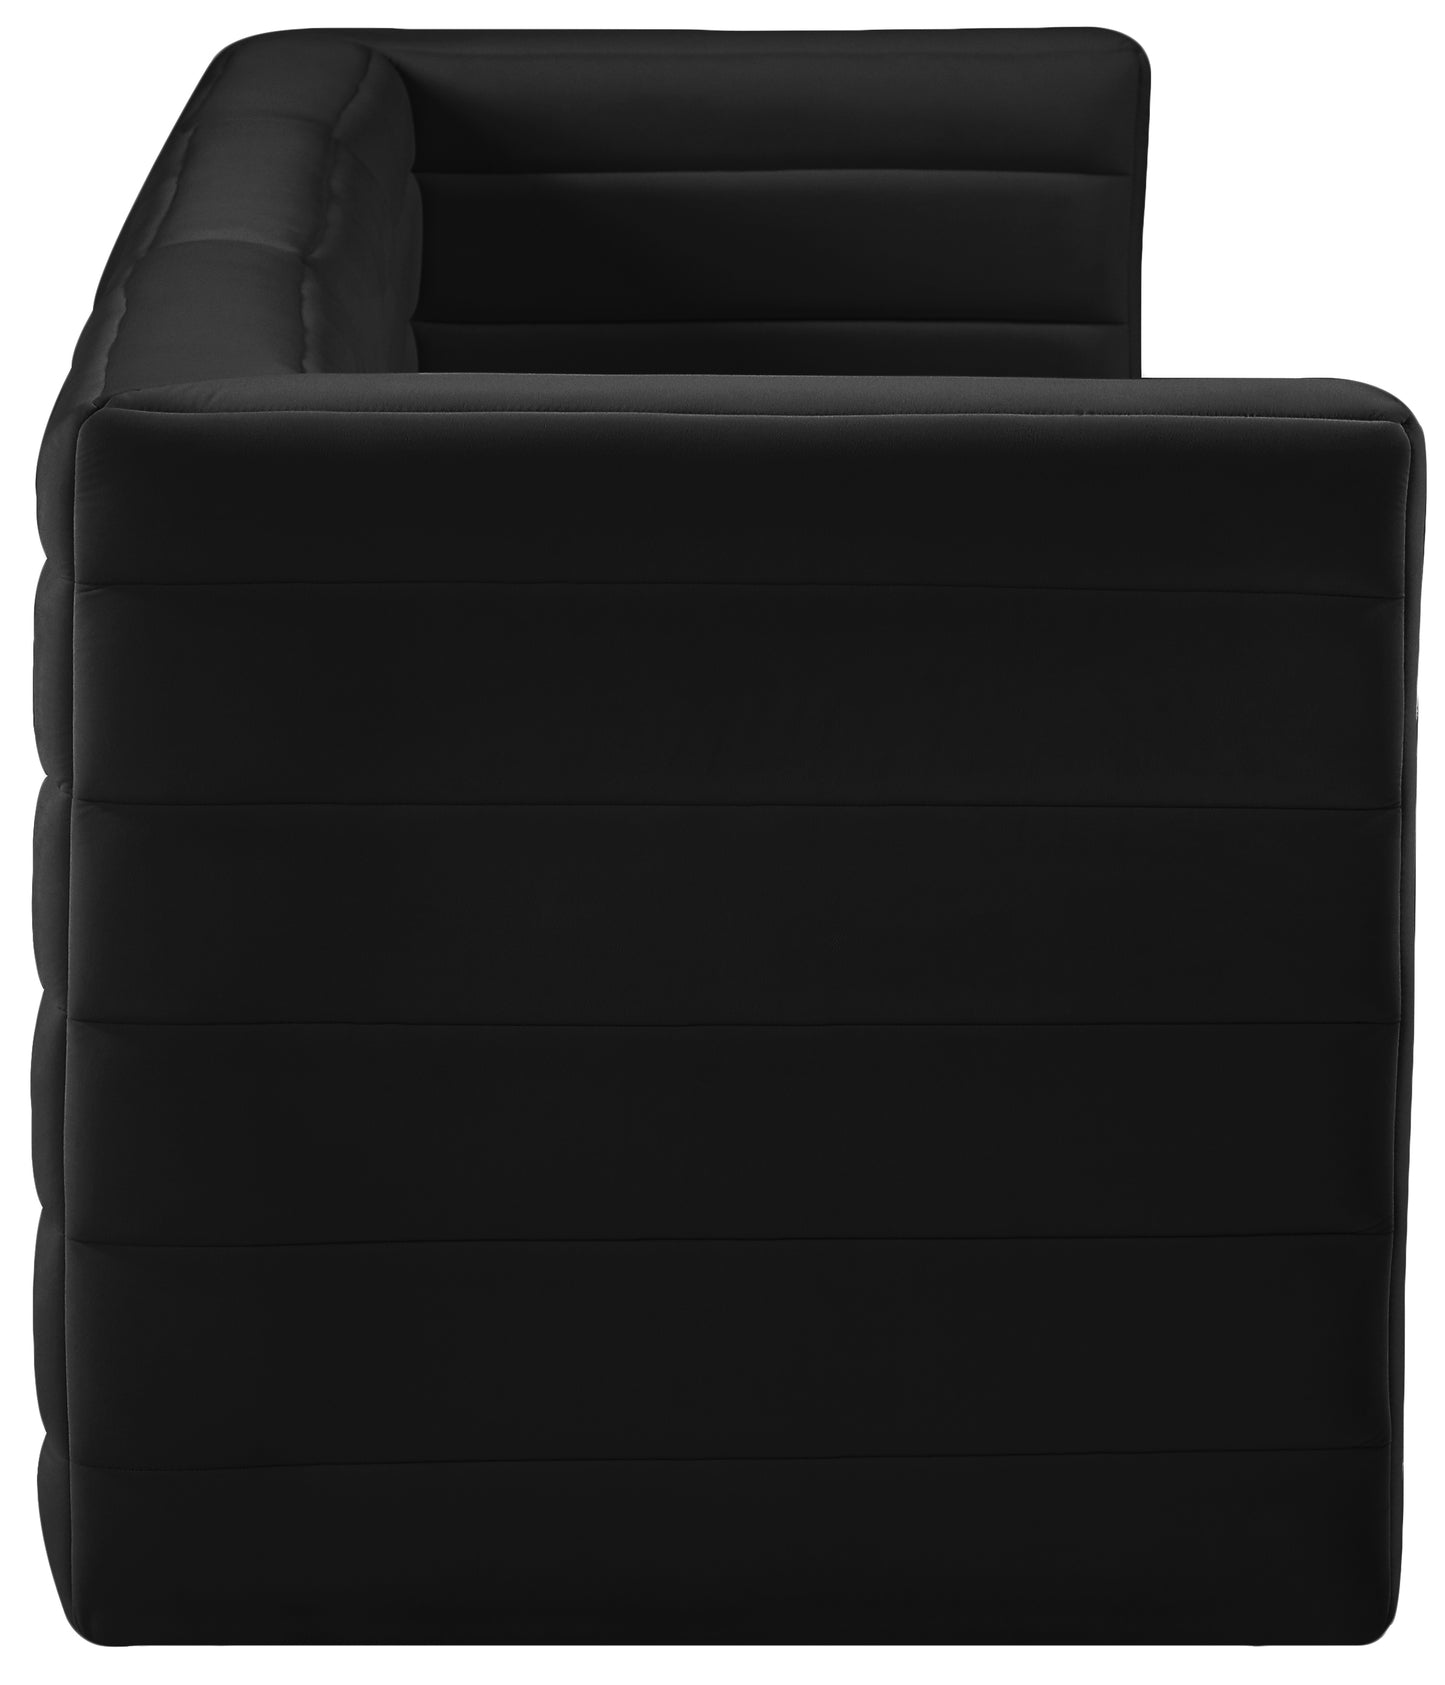 amelia black velvet modular sofa s95